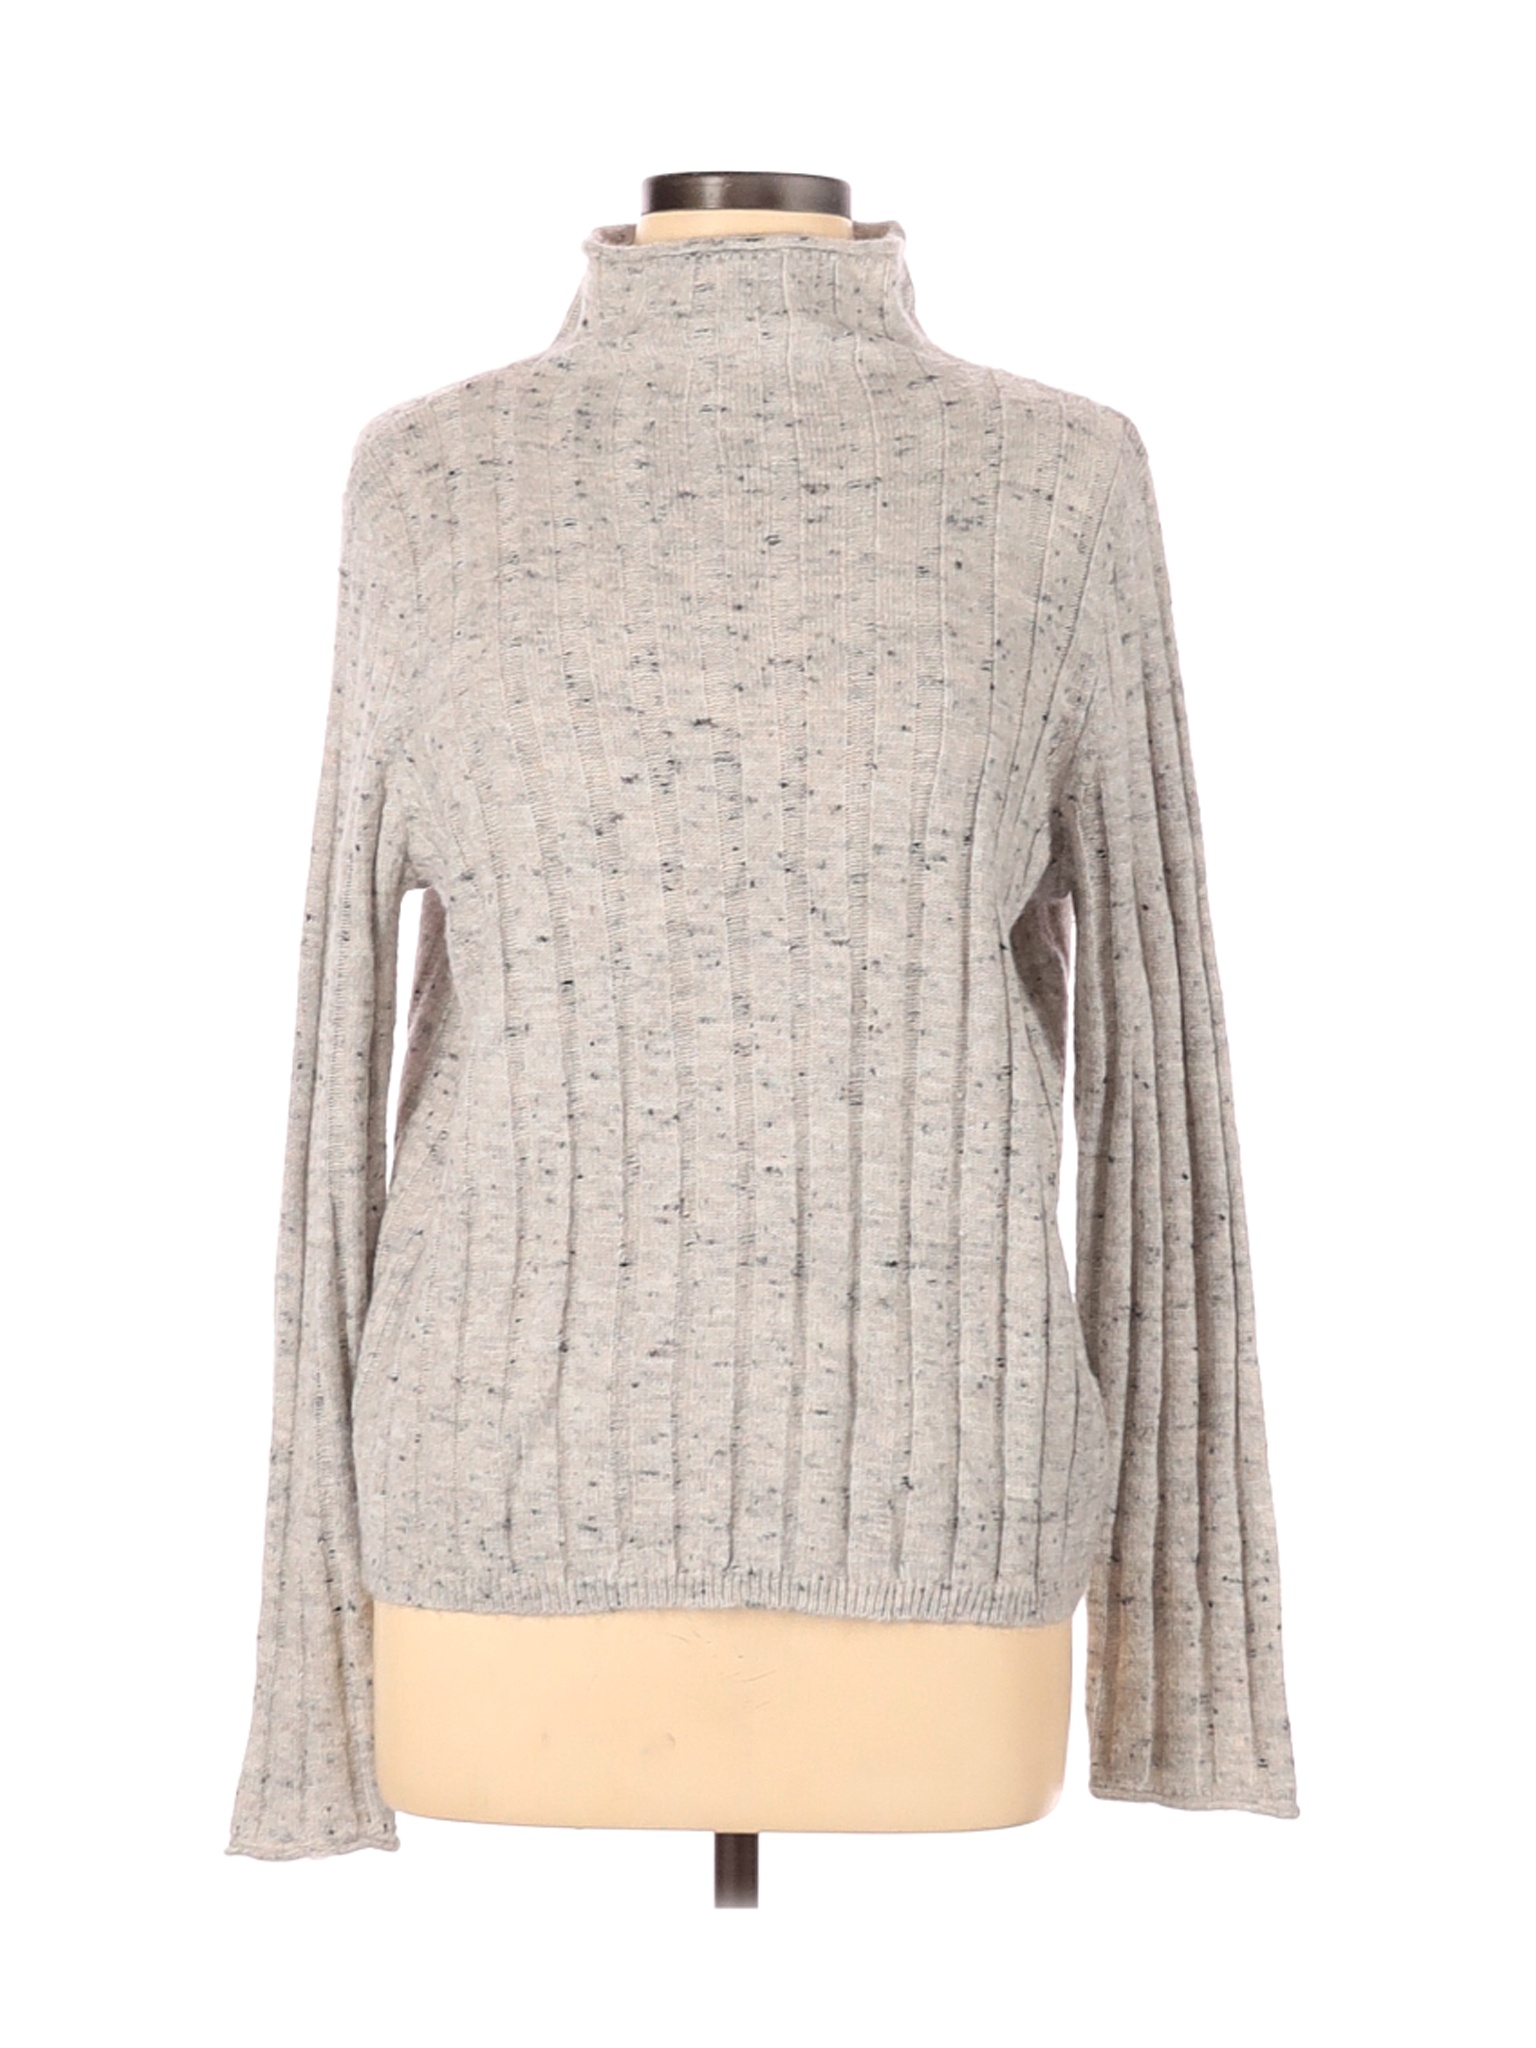 Madewell Women Brown Turtleneck Sweater L | eBay